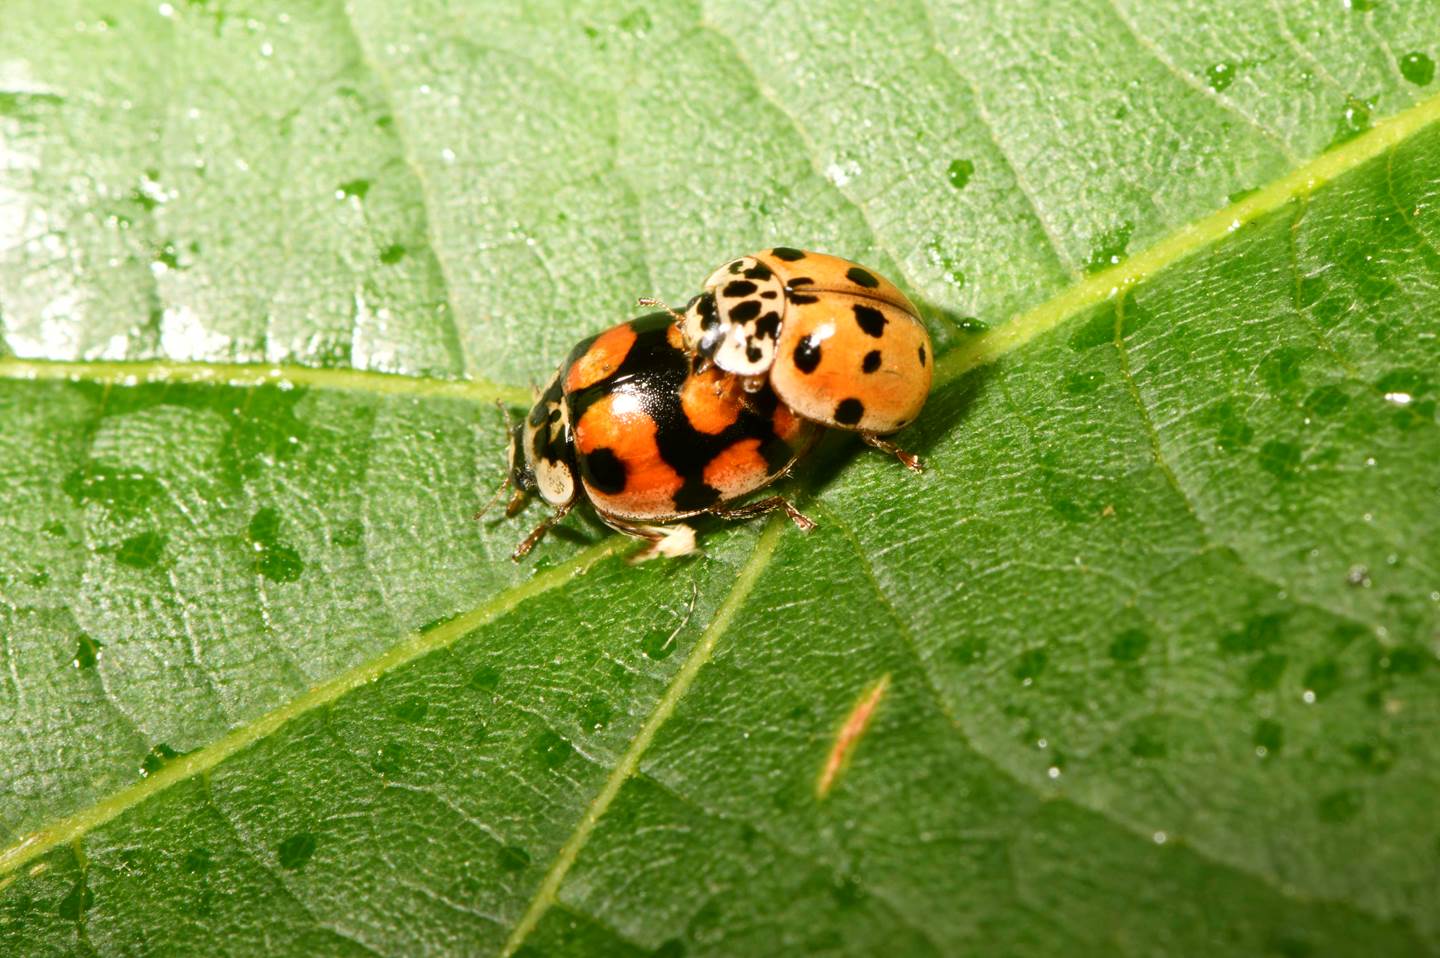 A ladybugs on a leaf

Description automatically generated